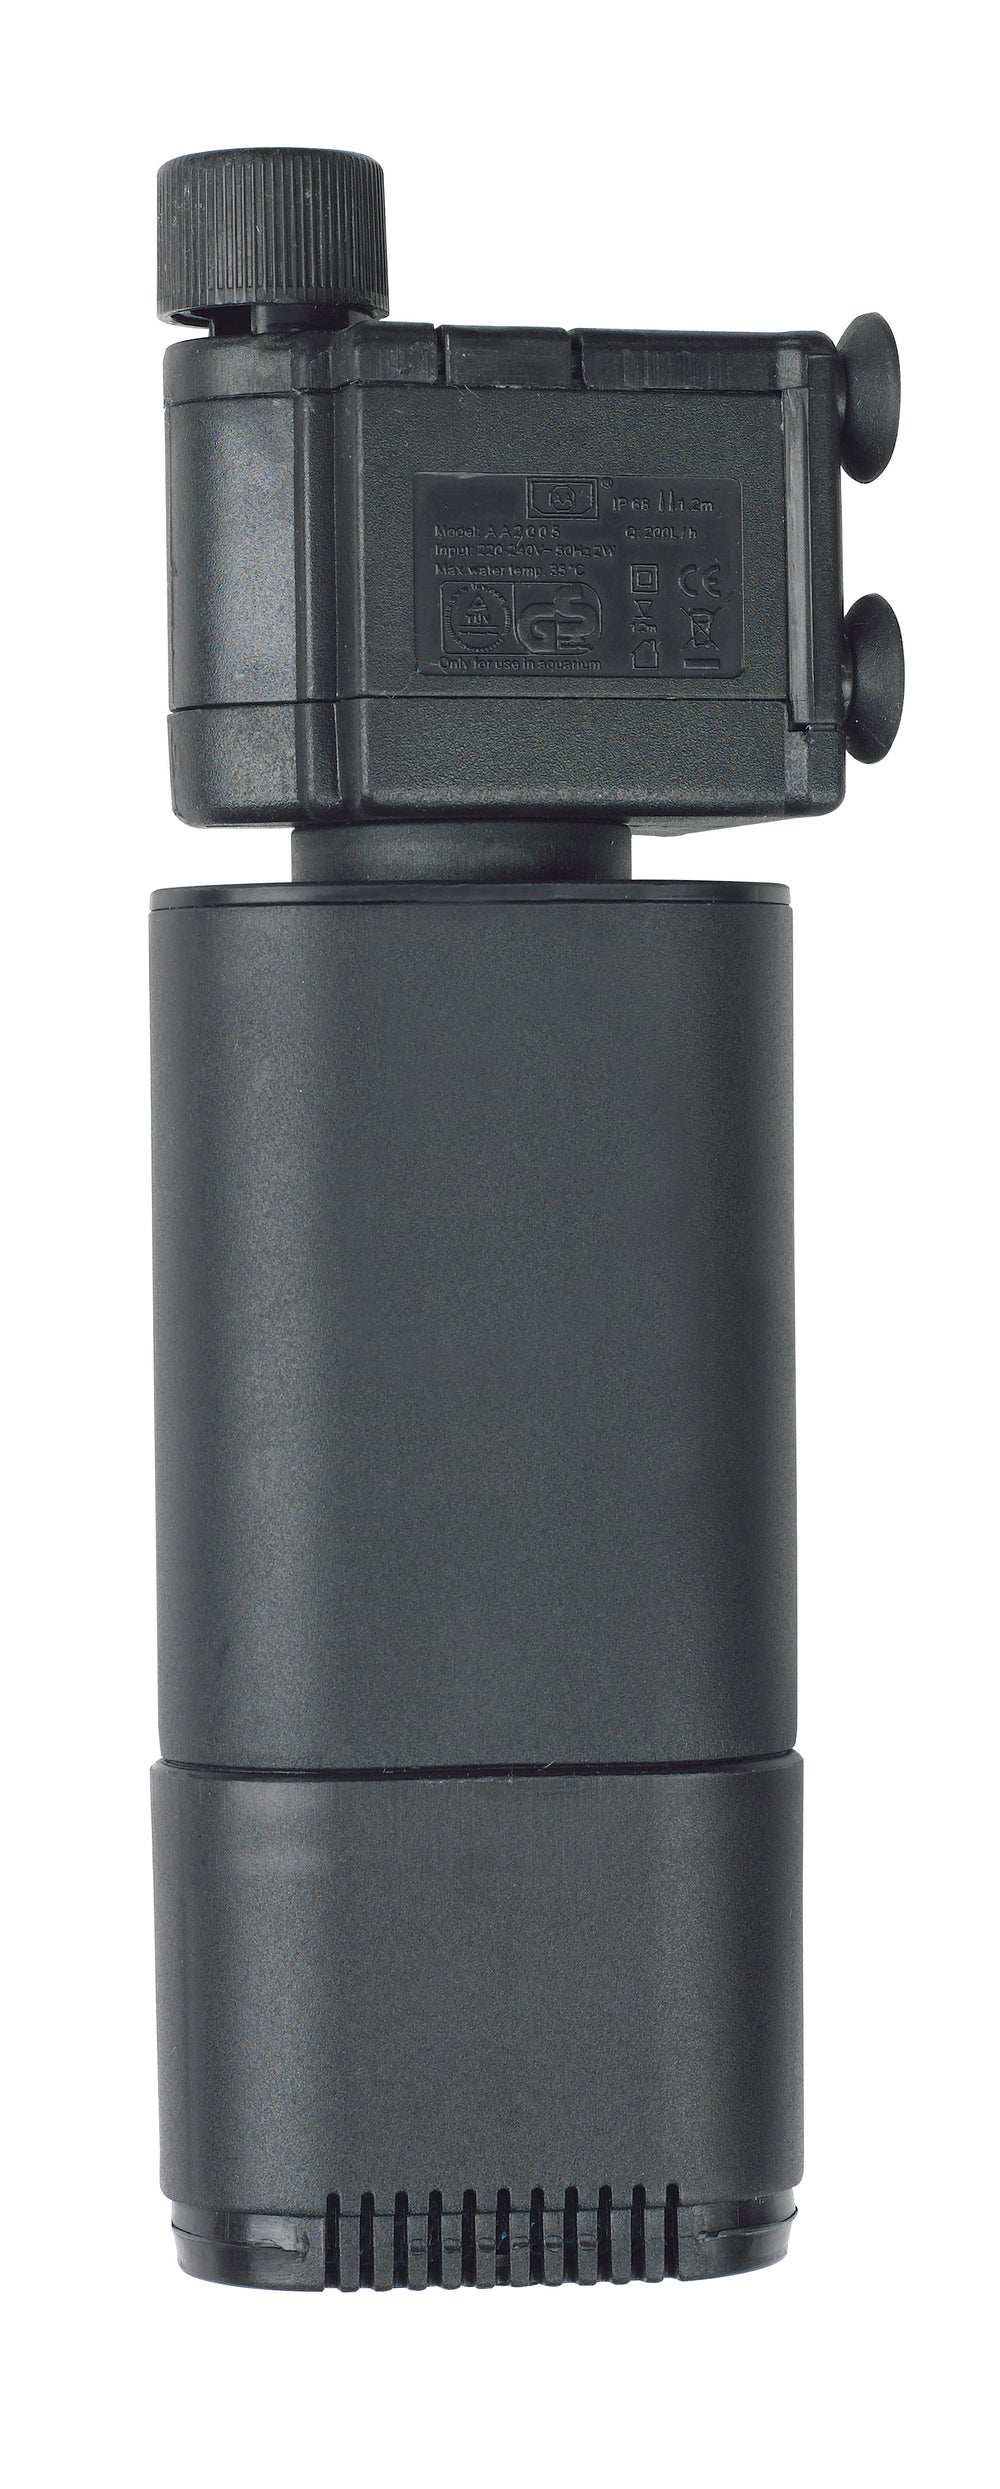 Aqua-Fit Mini UV Sterlizer - Up to 20G